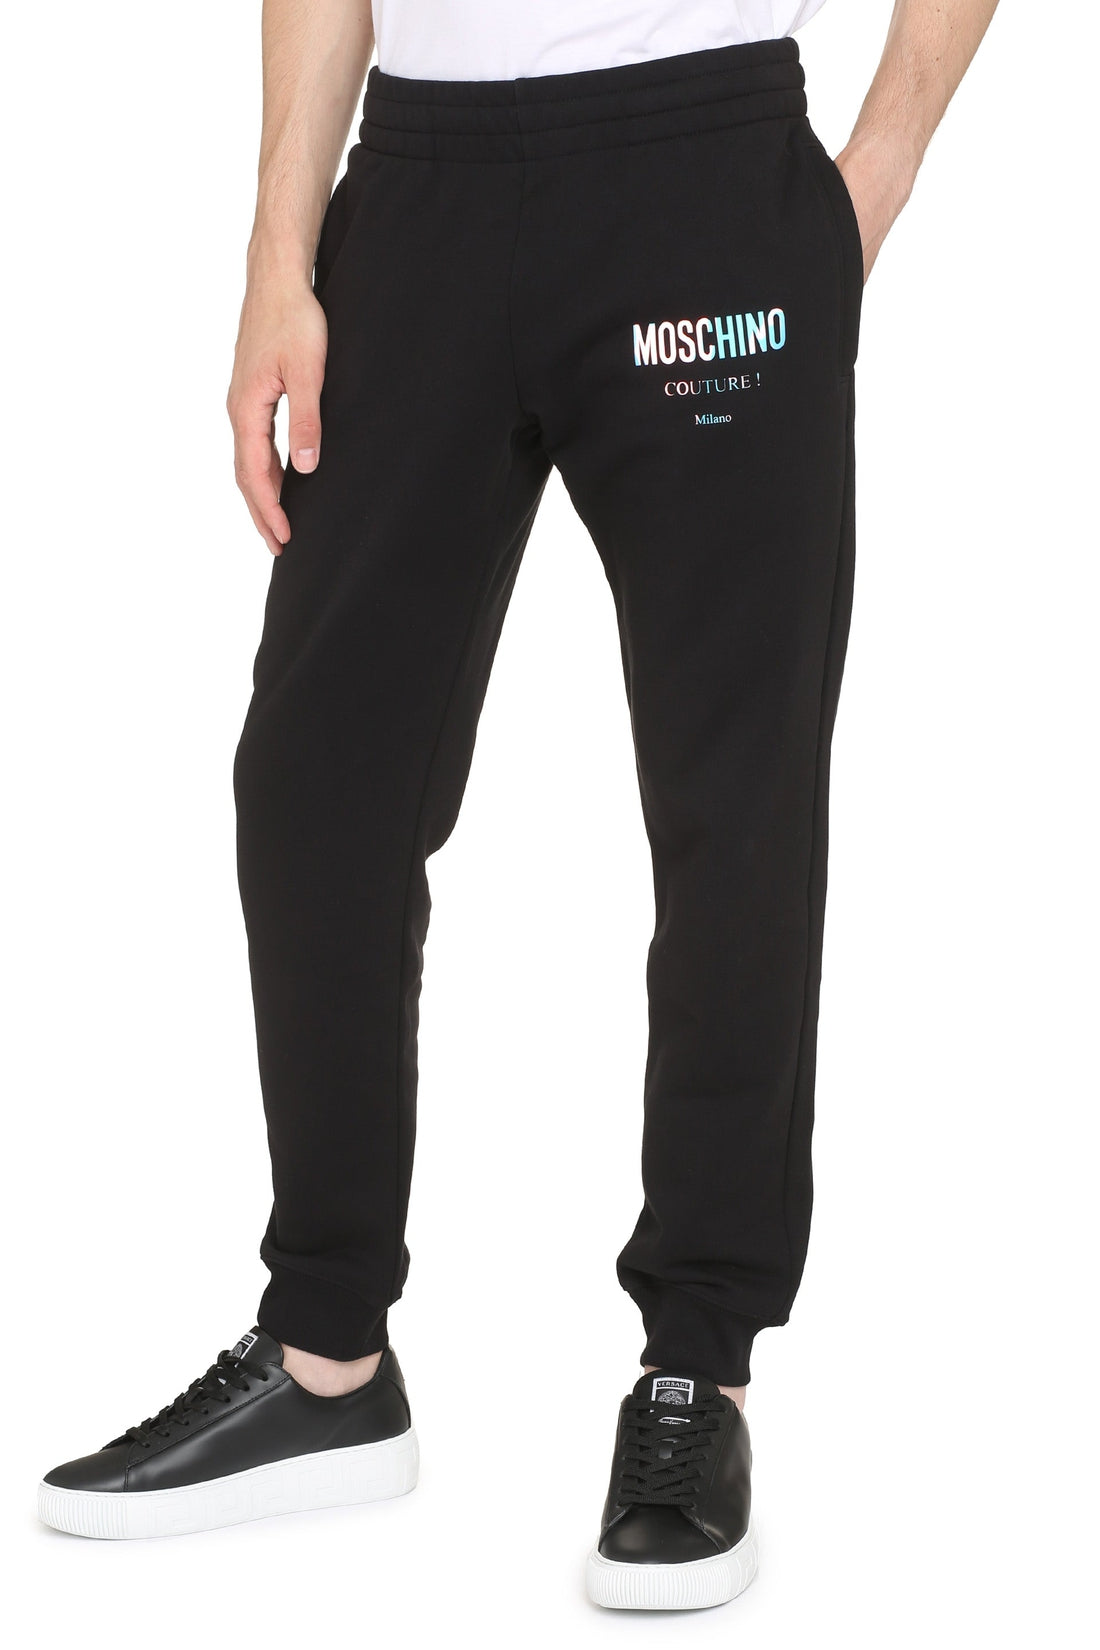 Moschino-OUTLET-SALE-Logo print sweatpants-ARCHIVIST